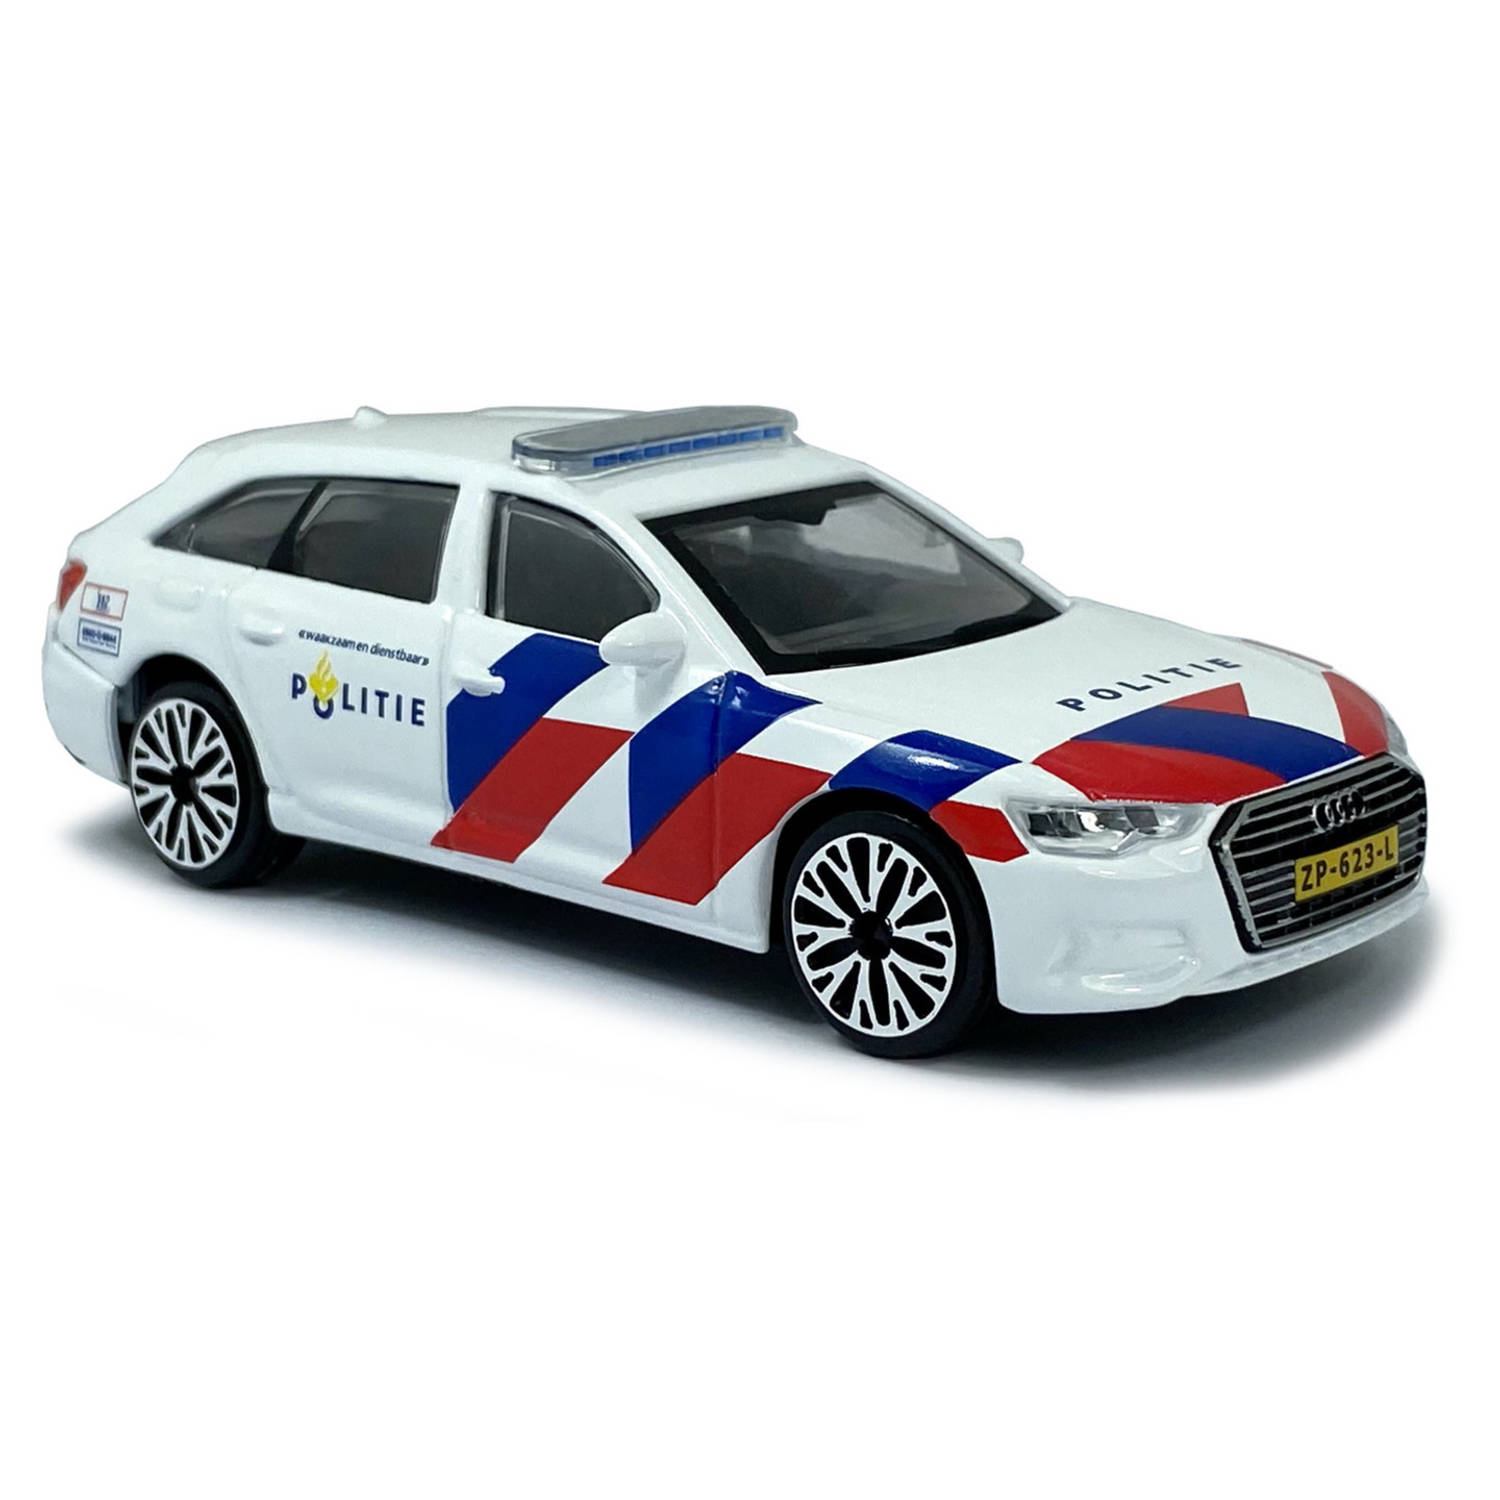 Modelauto Audi A6 Politie Nederland 2019 Schaal 1:43-11 X 4 X 3 Cm Speelgoed Auto's